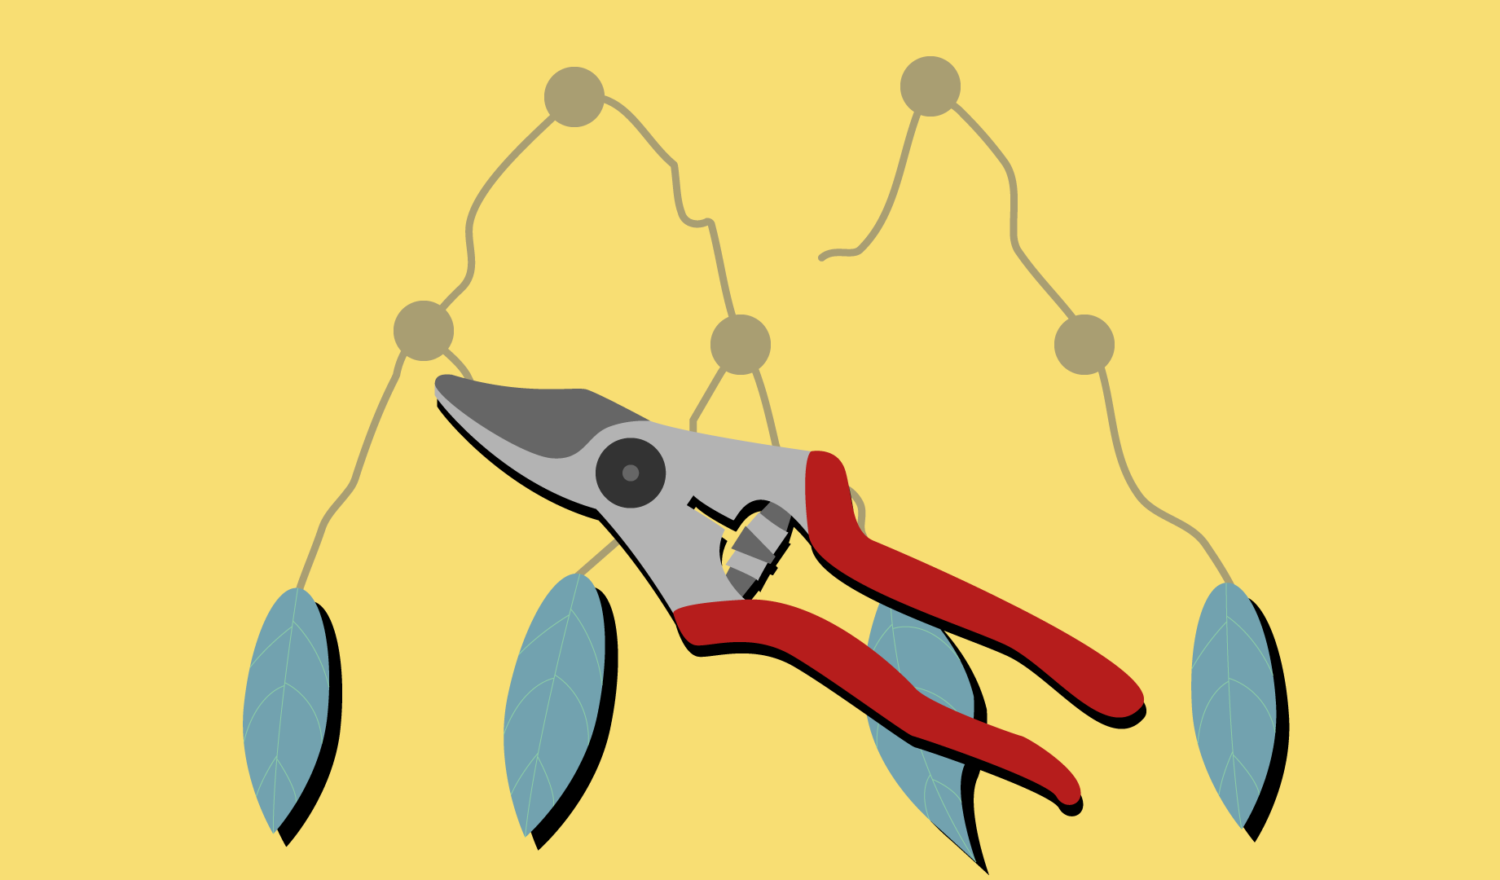 Illustration of scissors pruning an stylized ANN